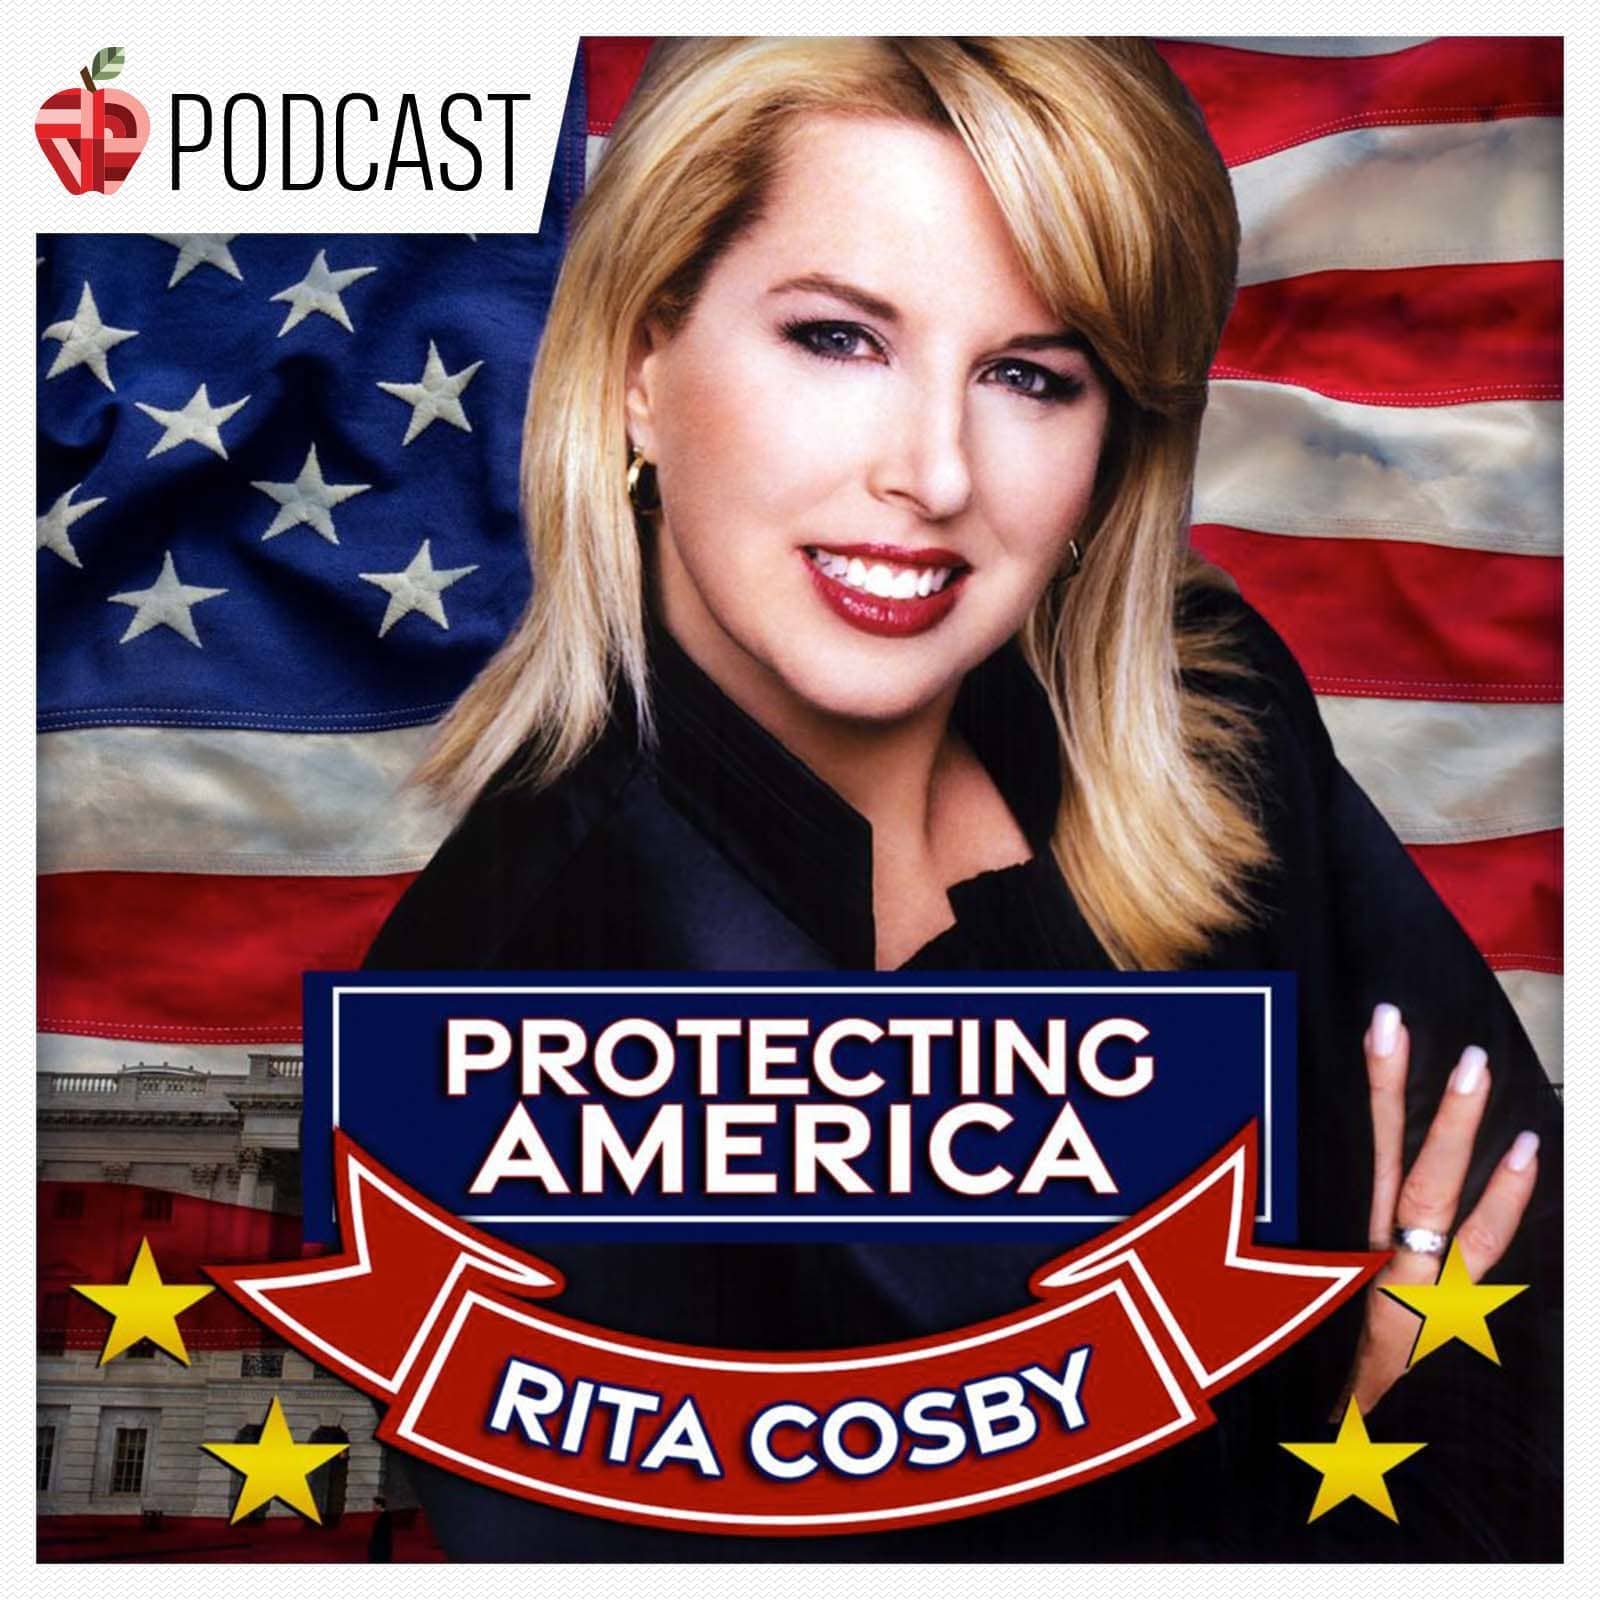 rita-cosby-protecting-america-correct-podcast-new-logo-48